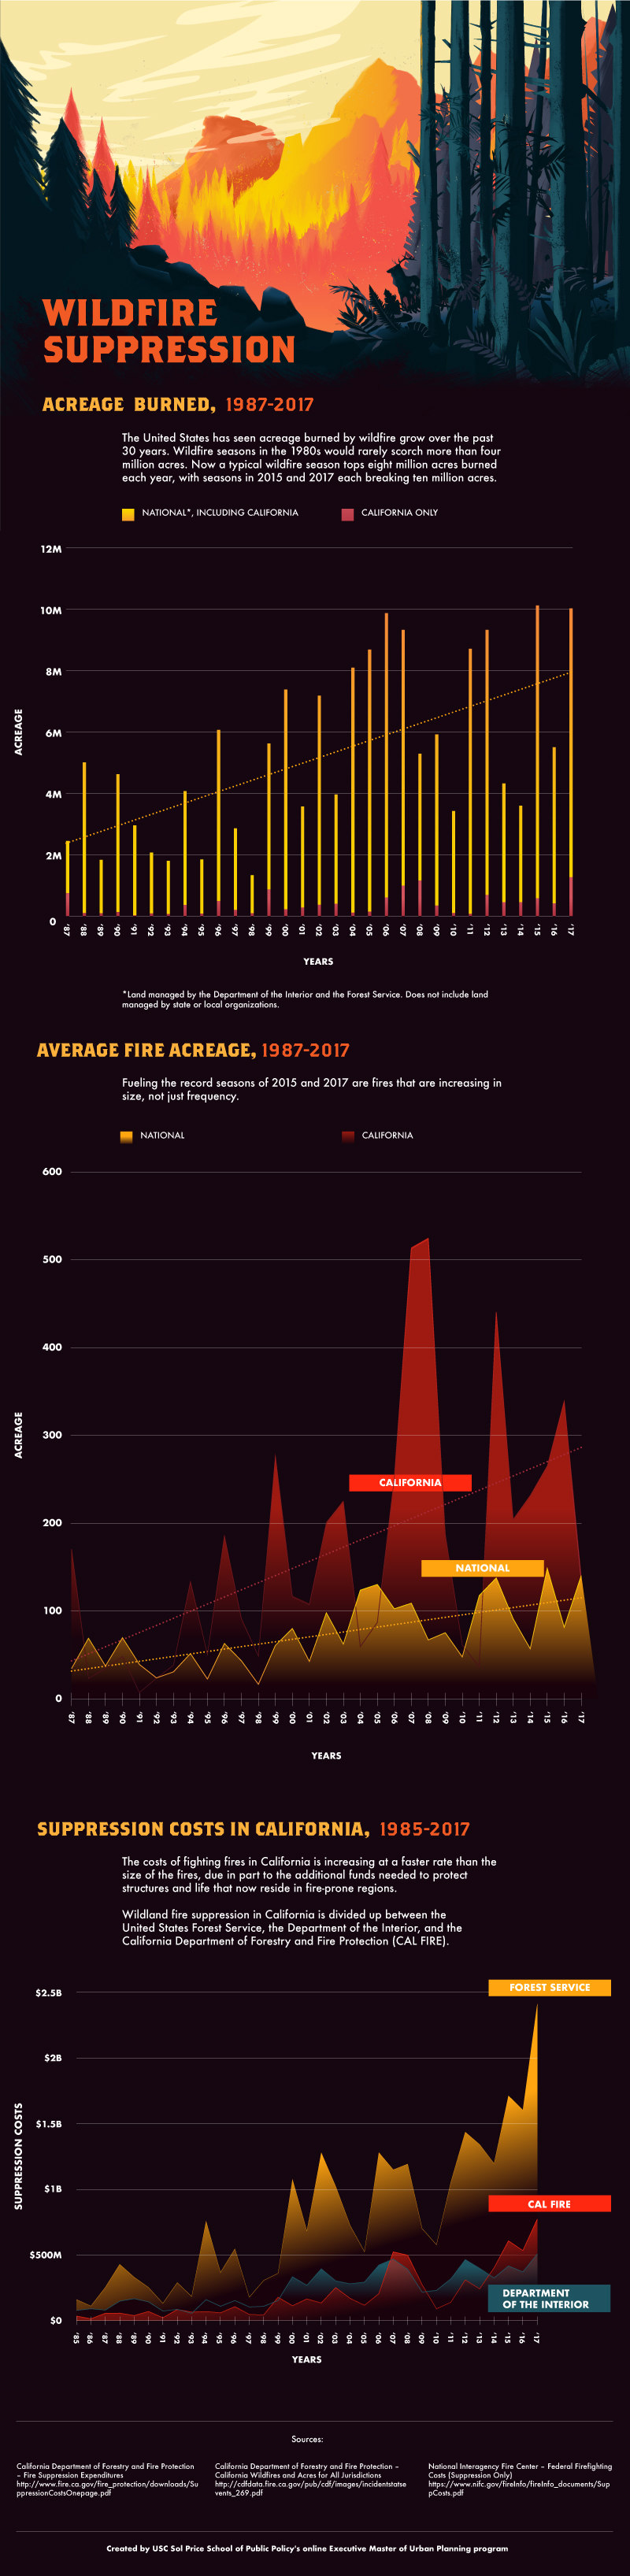 Wildfire Suppression Infographic